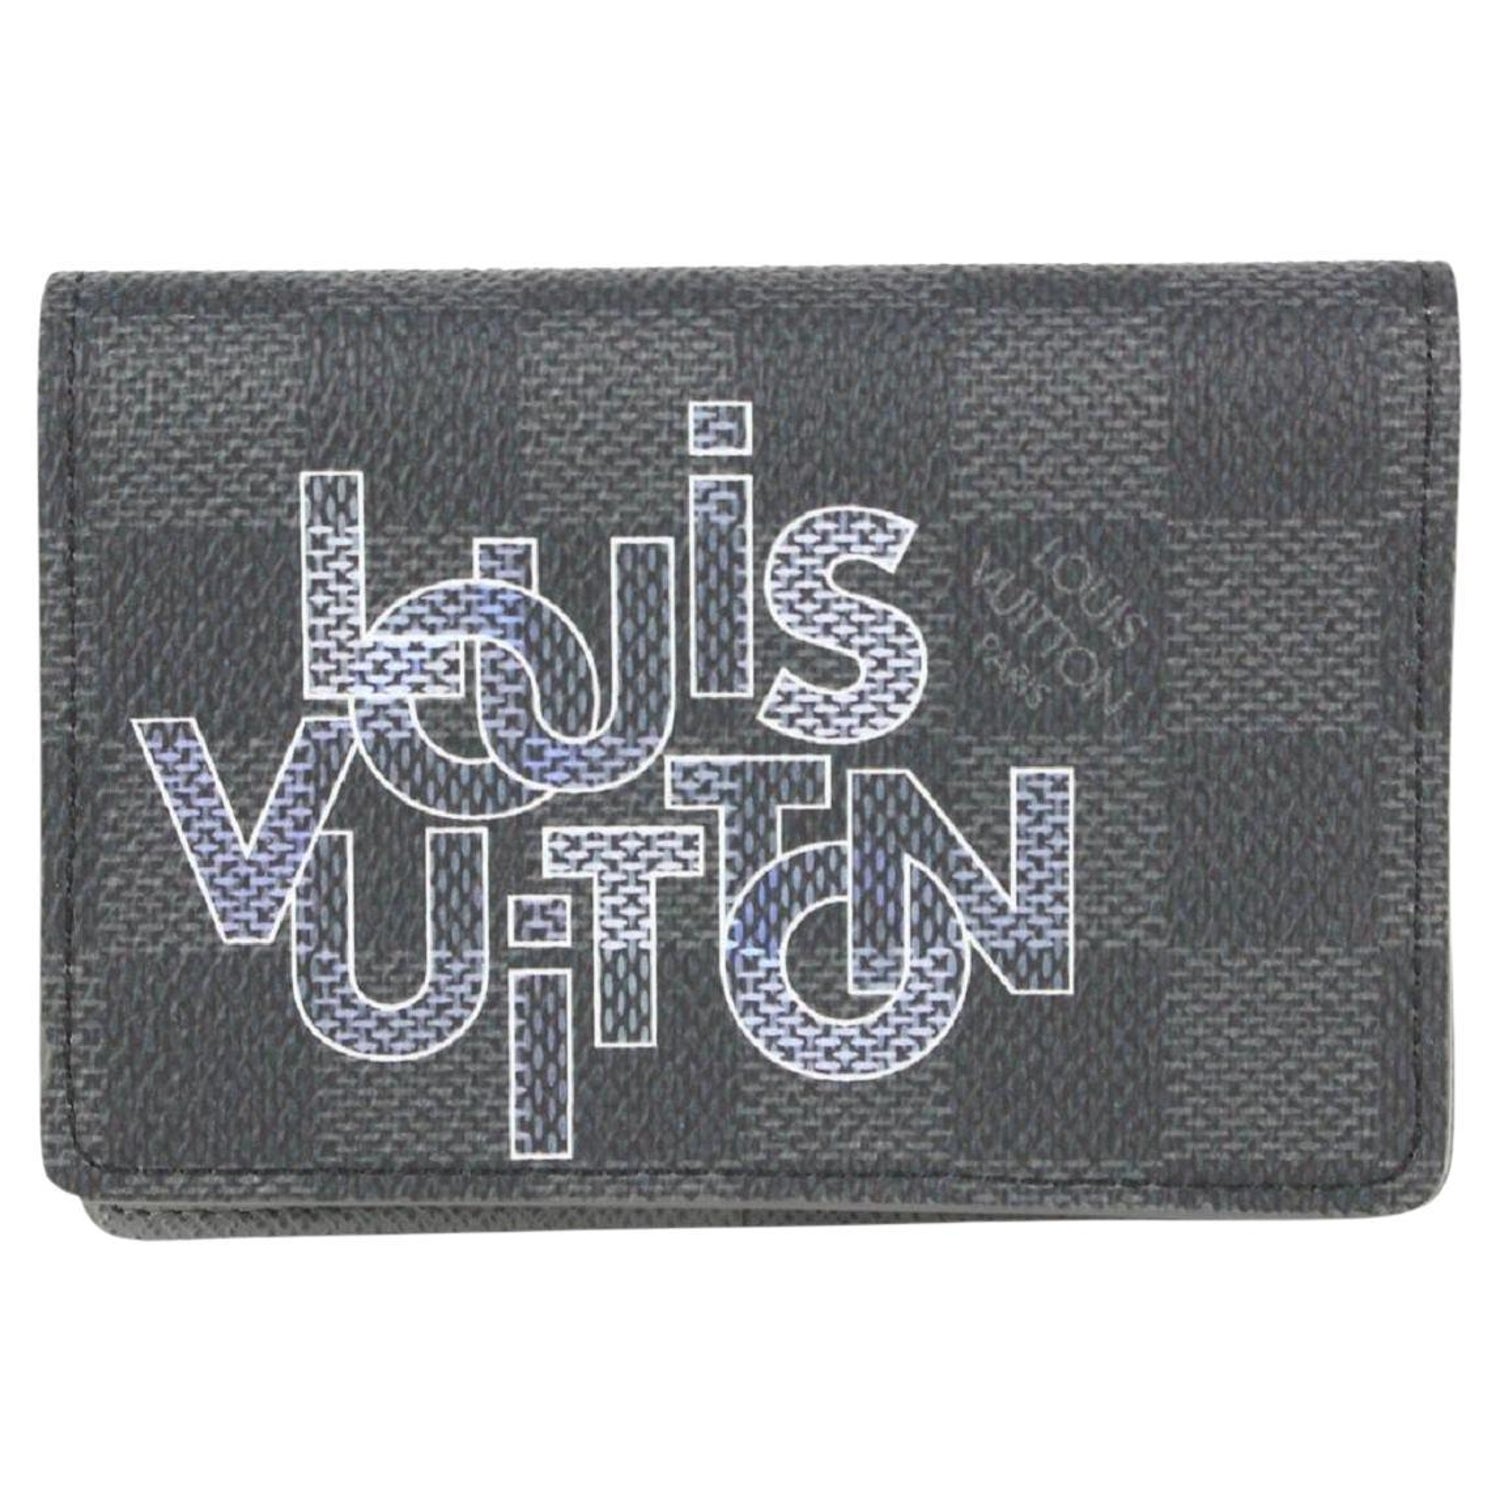 Louis Vuitton - Damier Graphite Wallet - 4 Pocket / 18 Card Slots